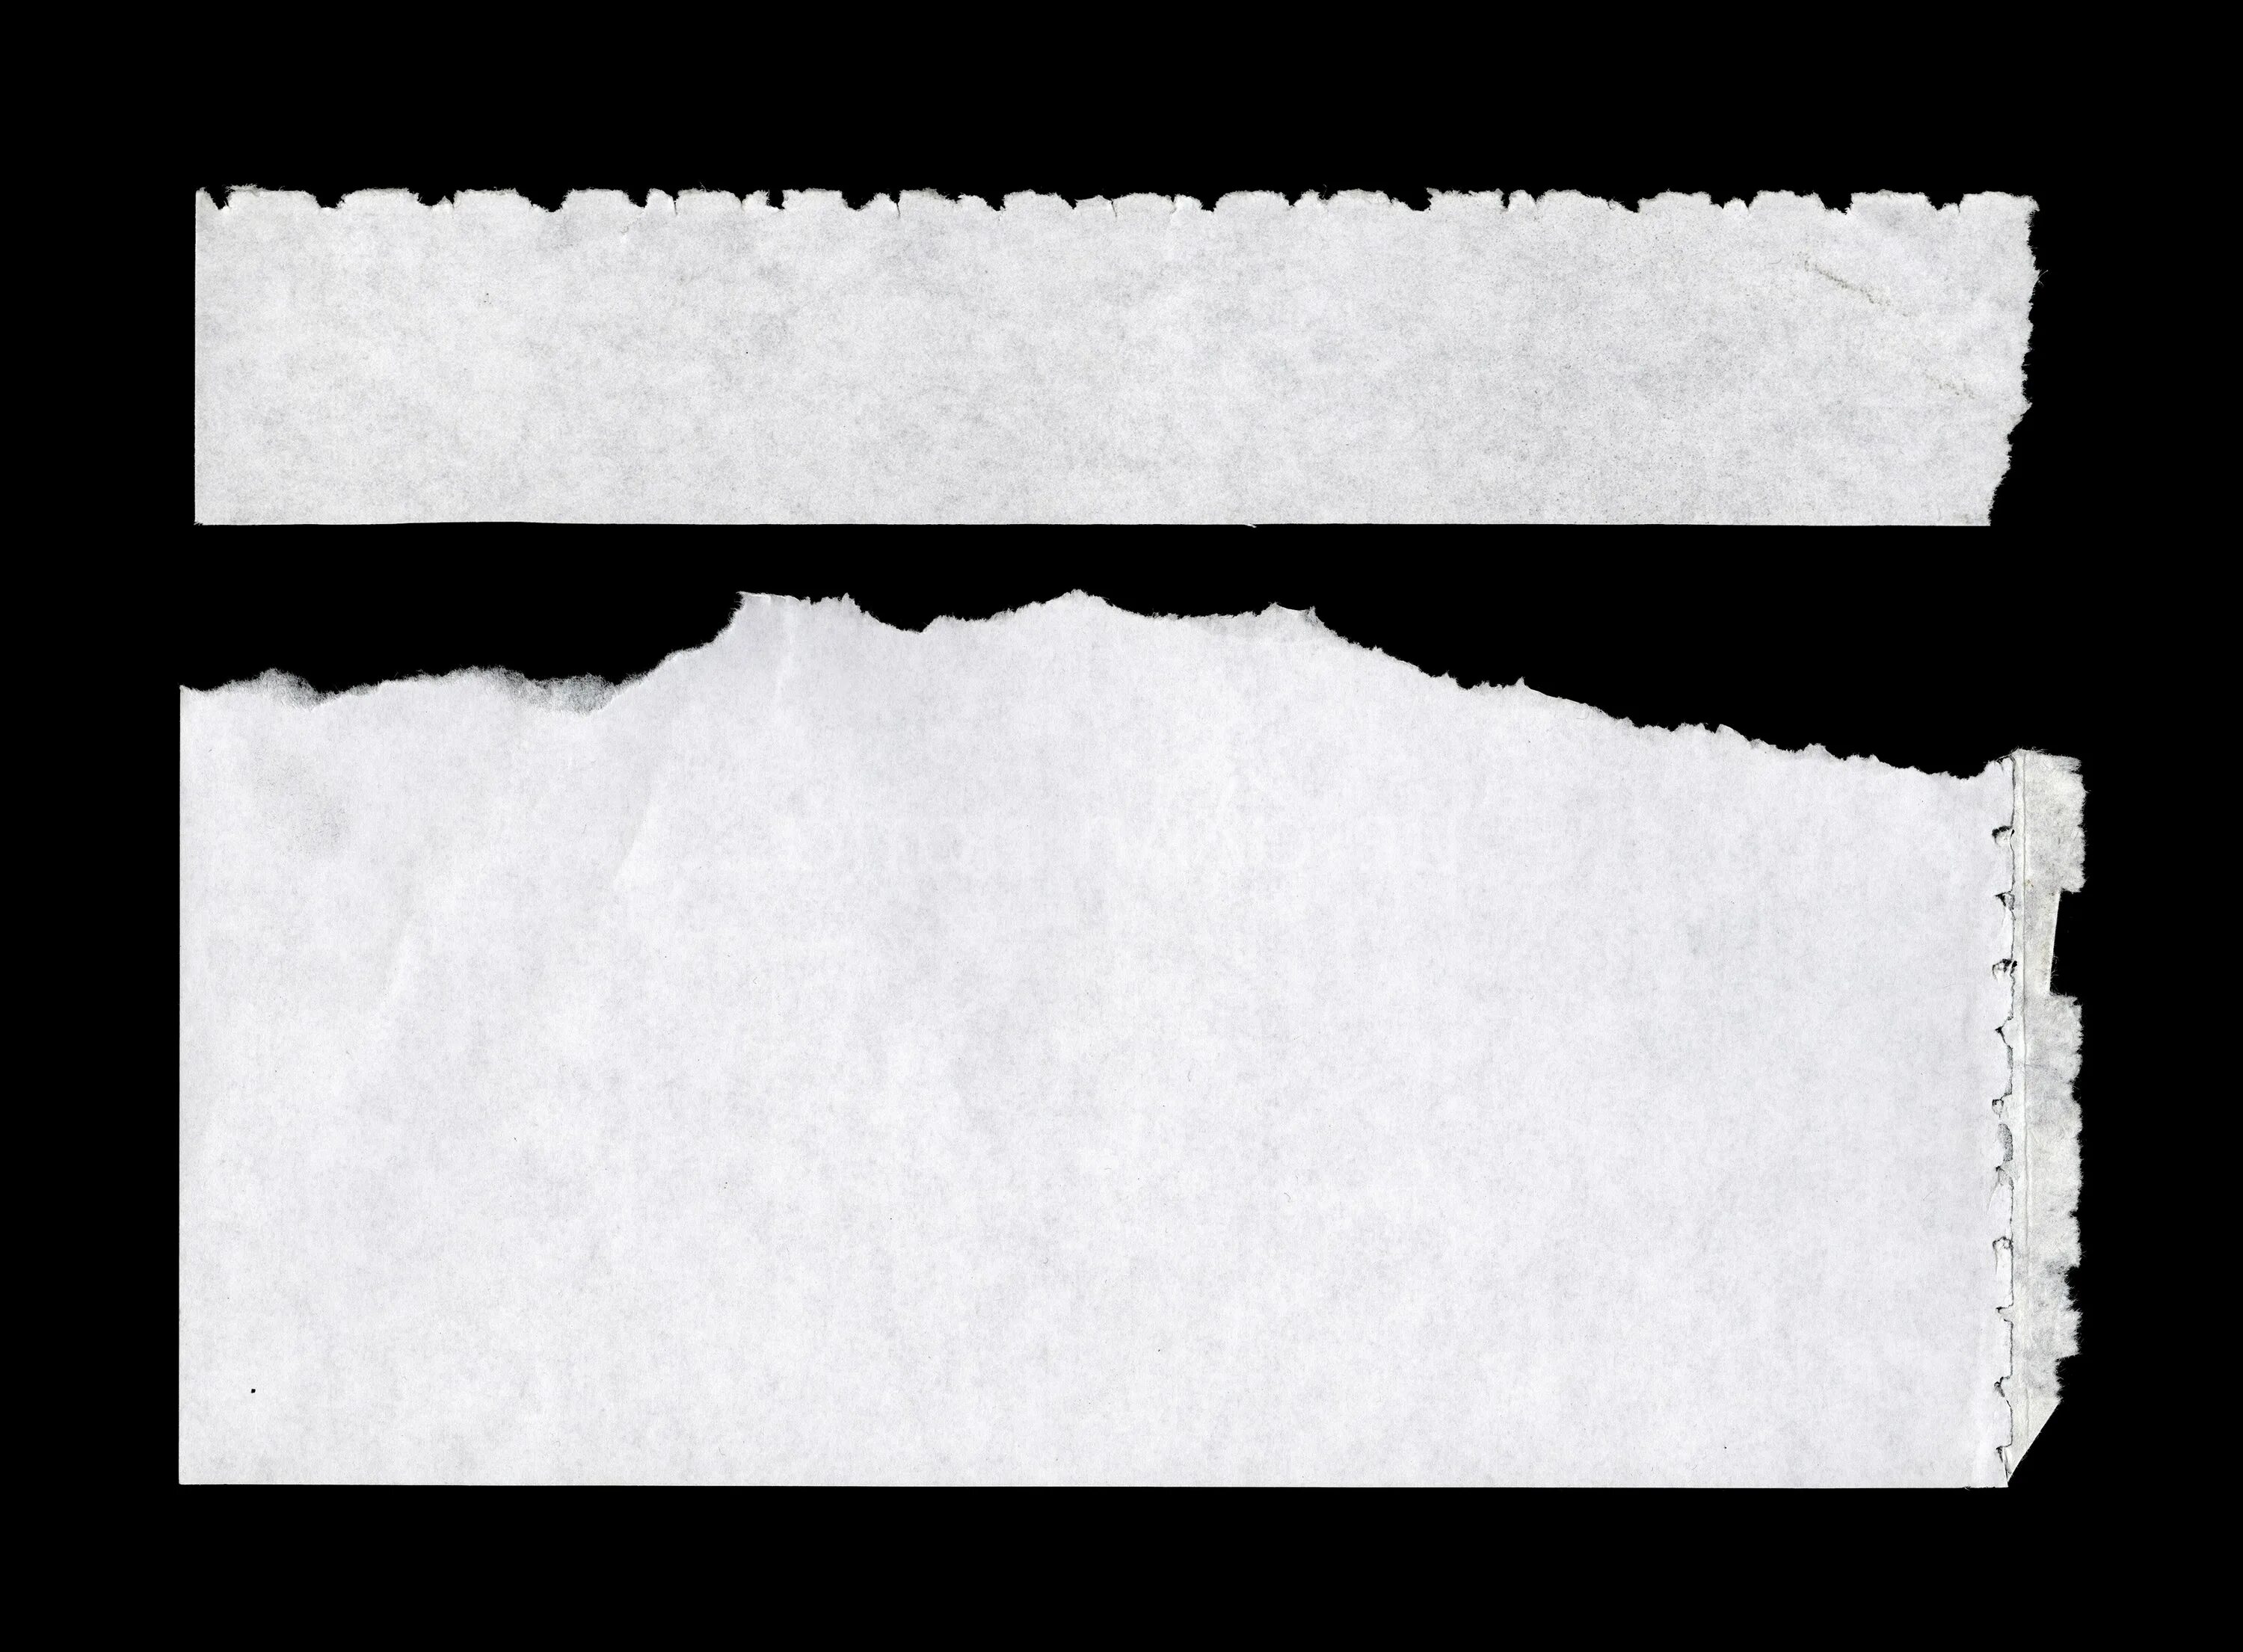 Эффект рваной бумаги. Рваная бумага. Оторванный кусок бумаги. Рваный край бумаги. Бамаг с рваными краями.